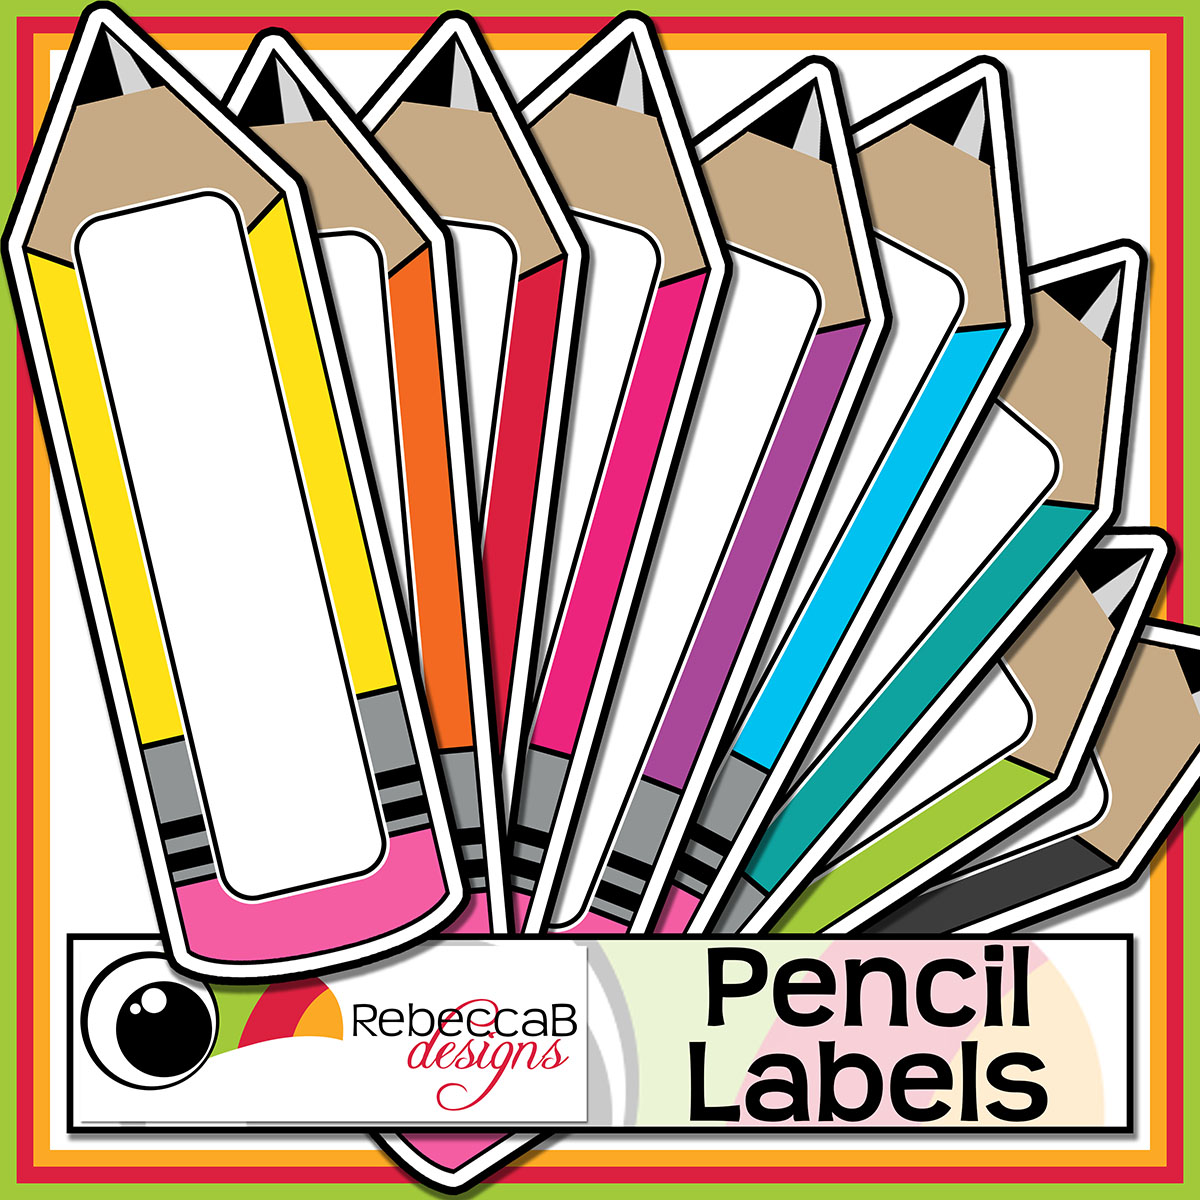 rebeccab-designs-free-pencil-labels-clip-art